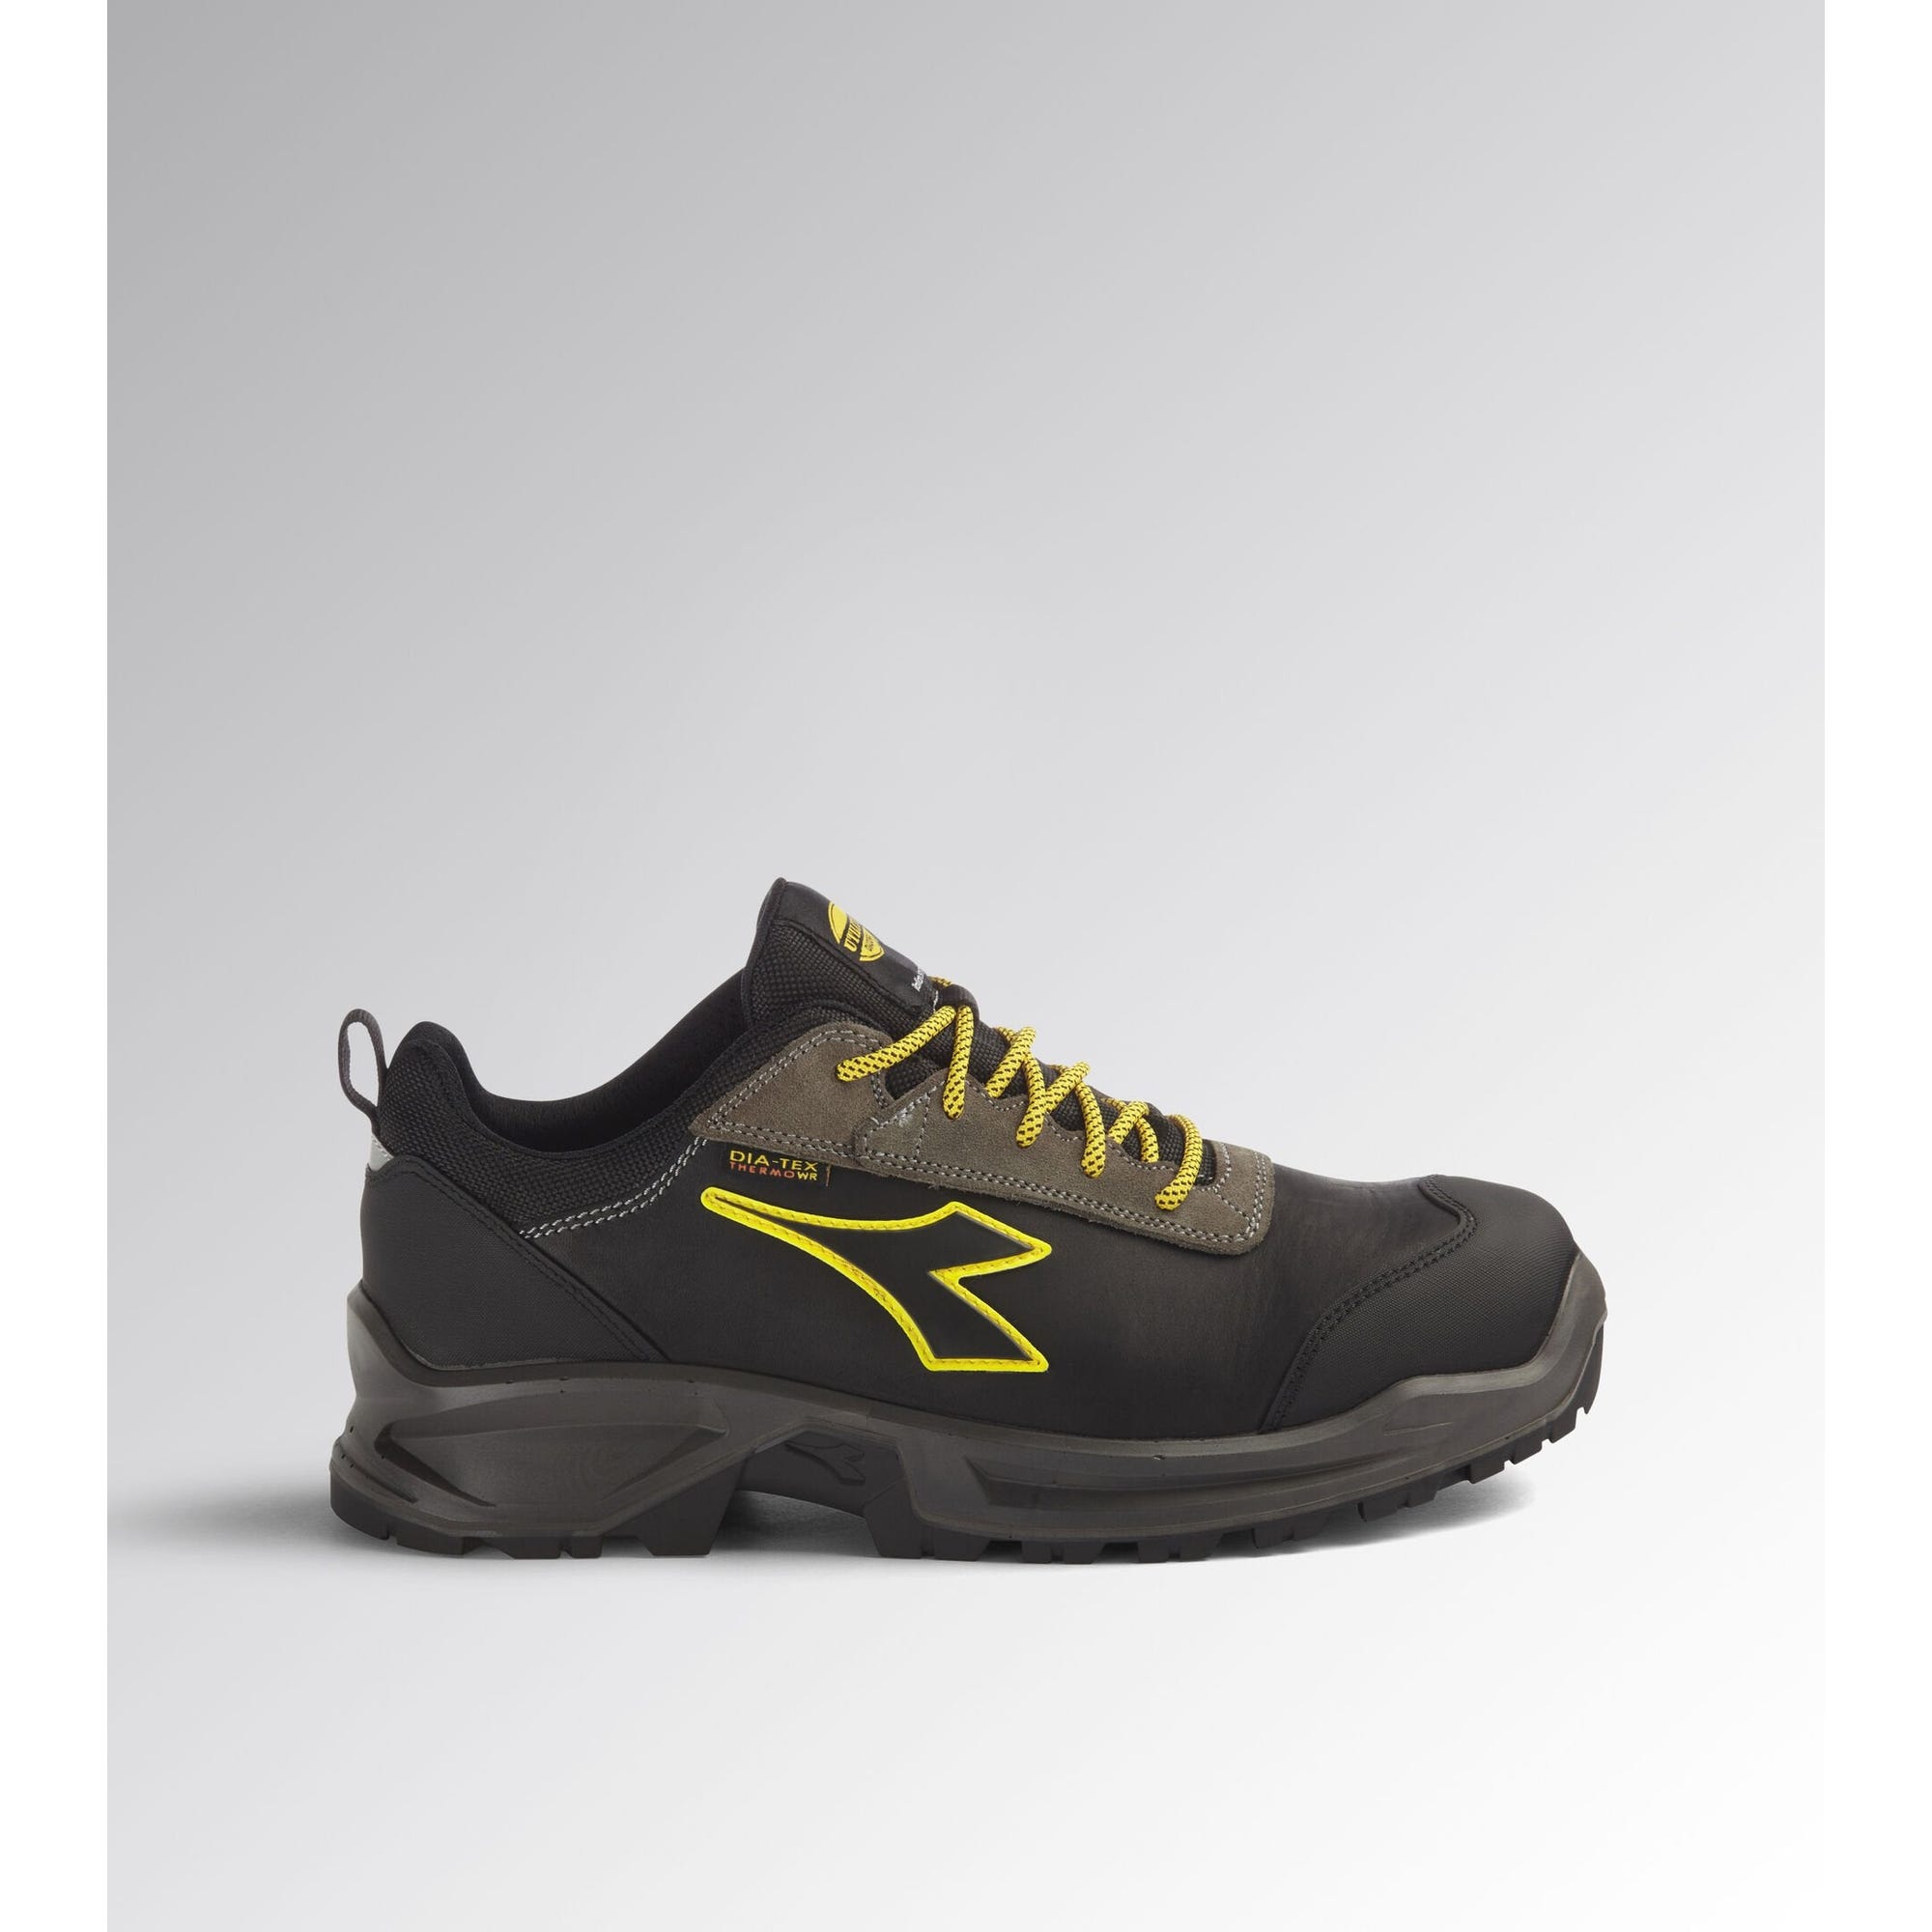 Chaussures imperméables thermo-isolantes SPORT DIATEX S3 Noir / Jaune 36 5